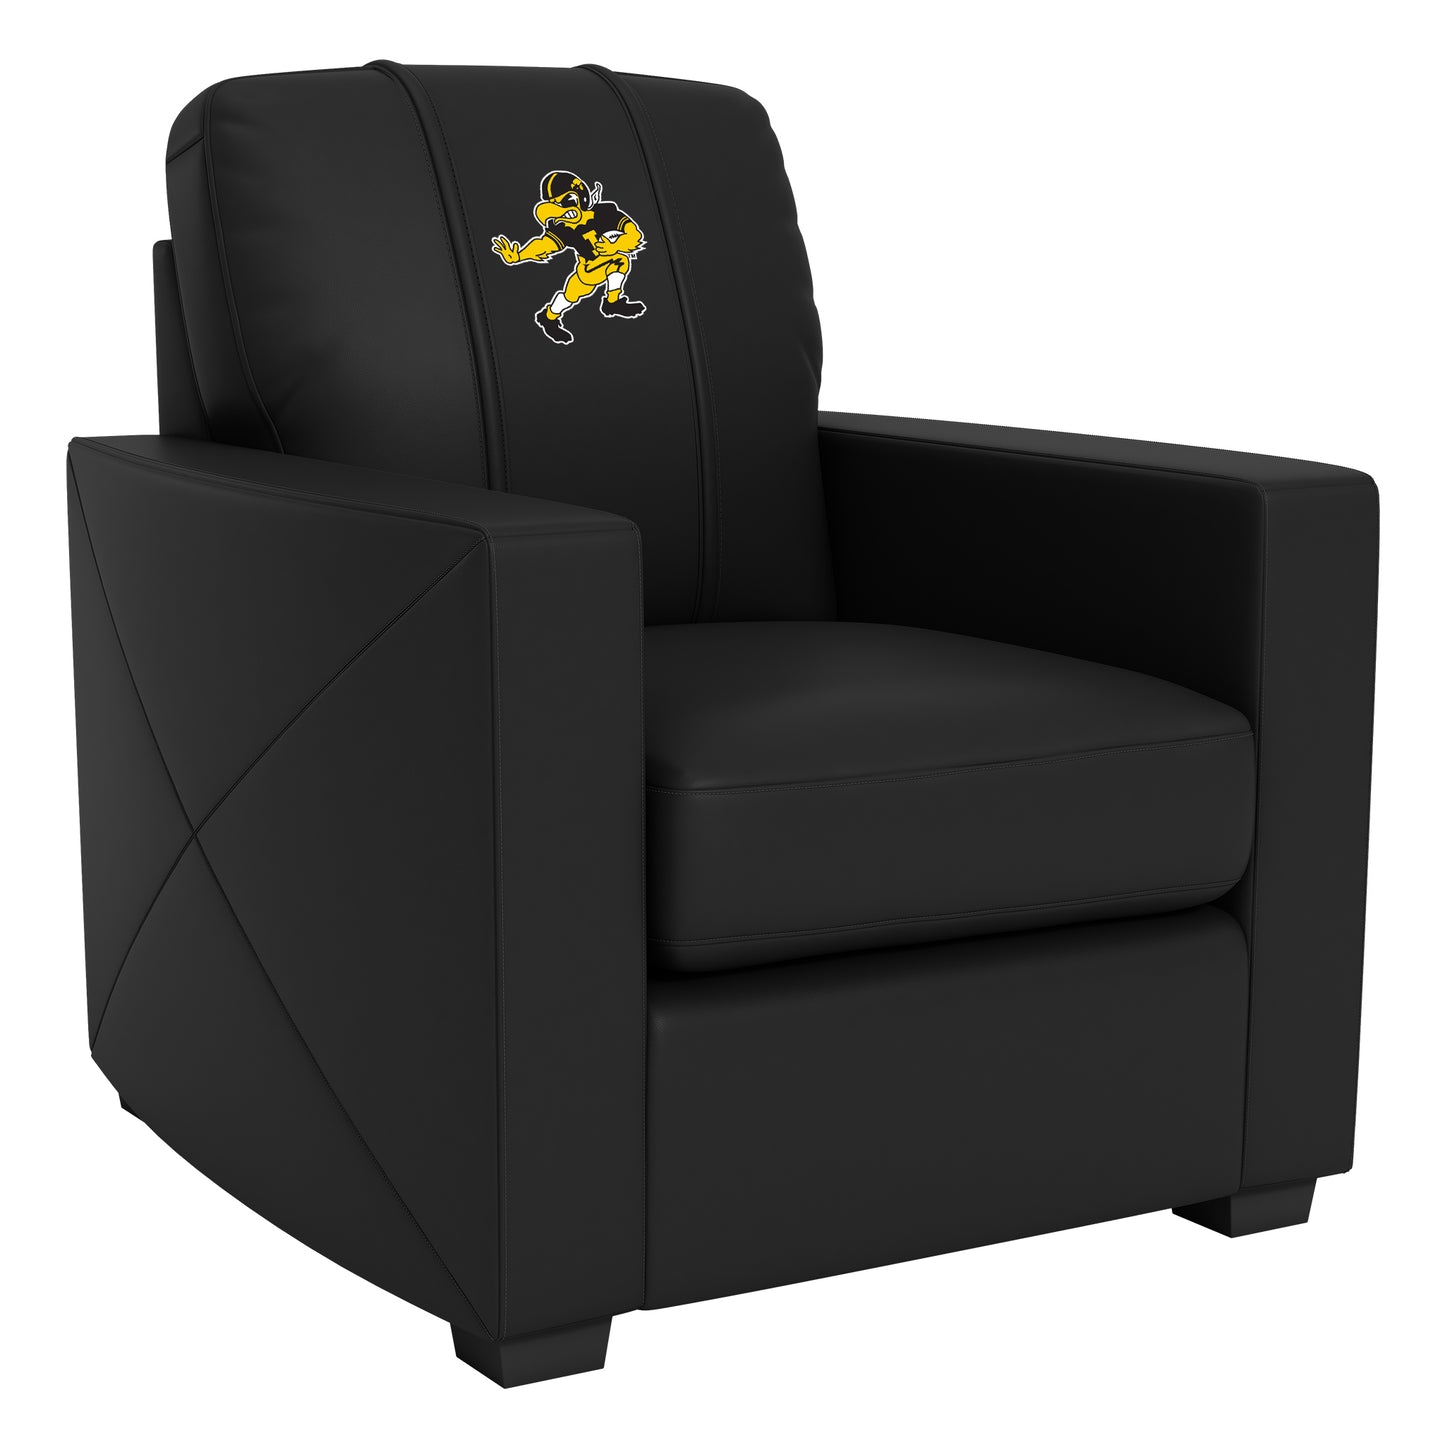 Silver Club Chair with Iowa Hawkeyes Football Herky Logo